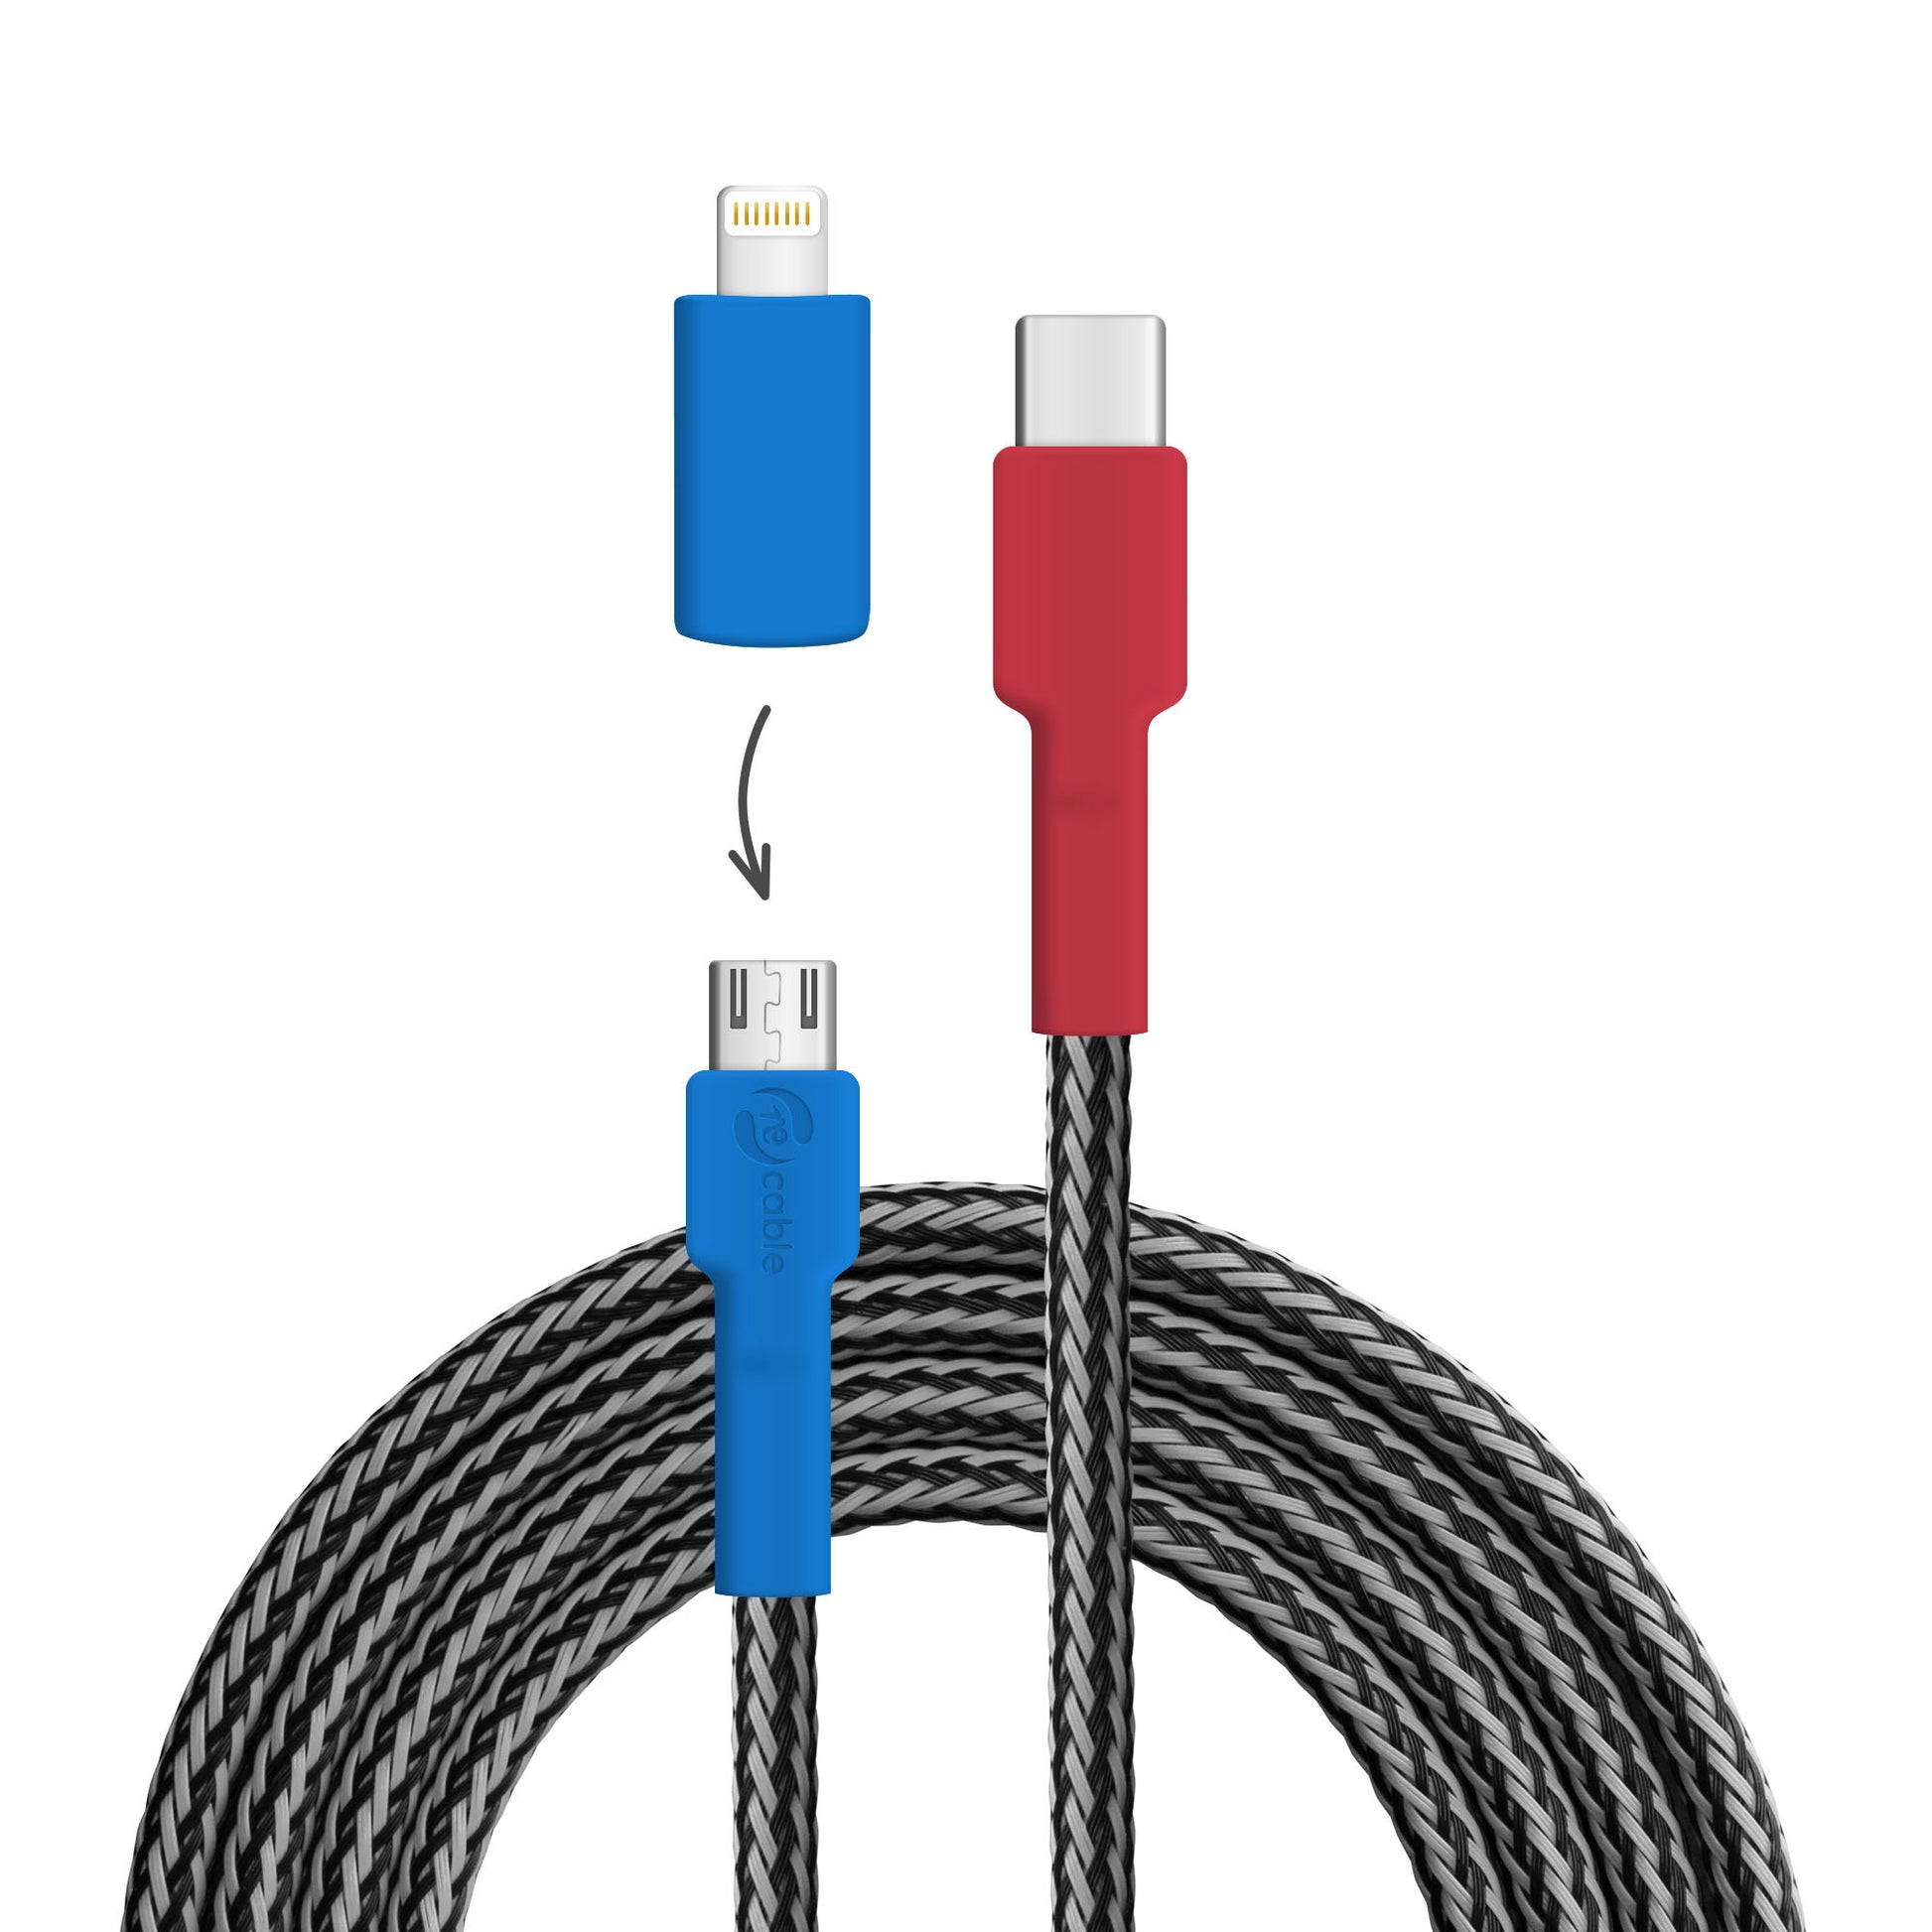 USB-Kabel, Design: Helmkasuar, Anschlüsse: USB C auf Micro-USB mit Lightning Adapter (nicht verbunden)